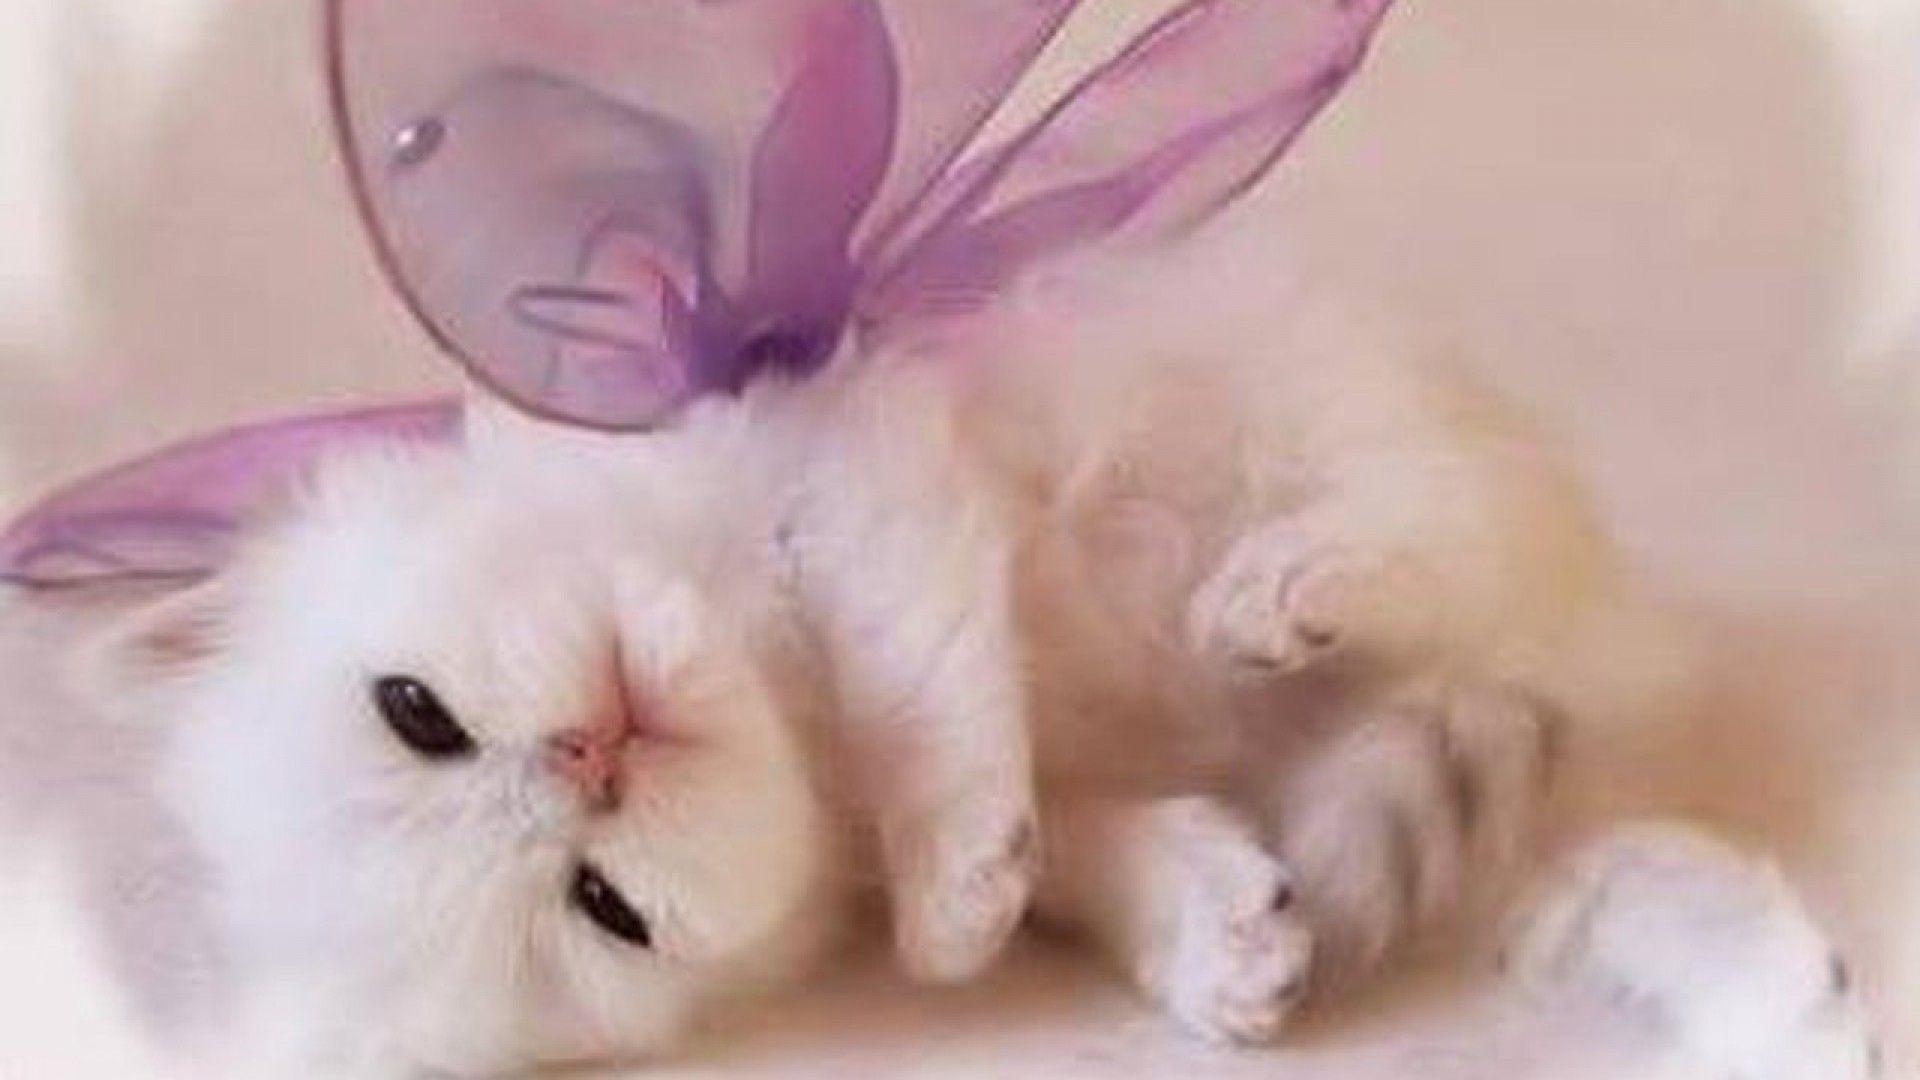 Pink Cat Desktop Wallpapers - Top Free Pink Cat Desktop Backgrounds - WallpaperAccess